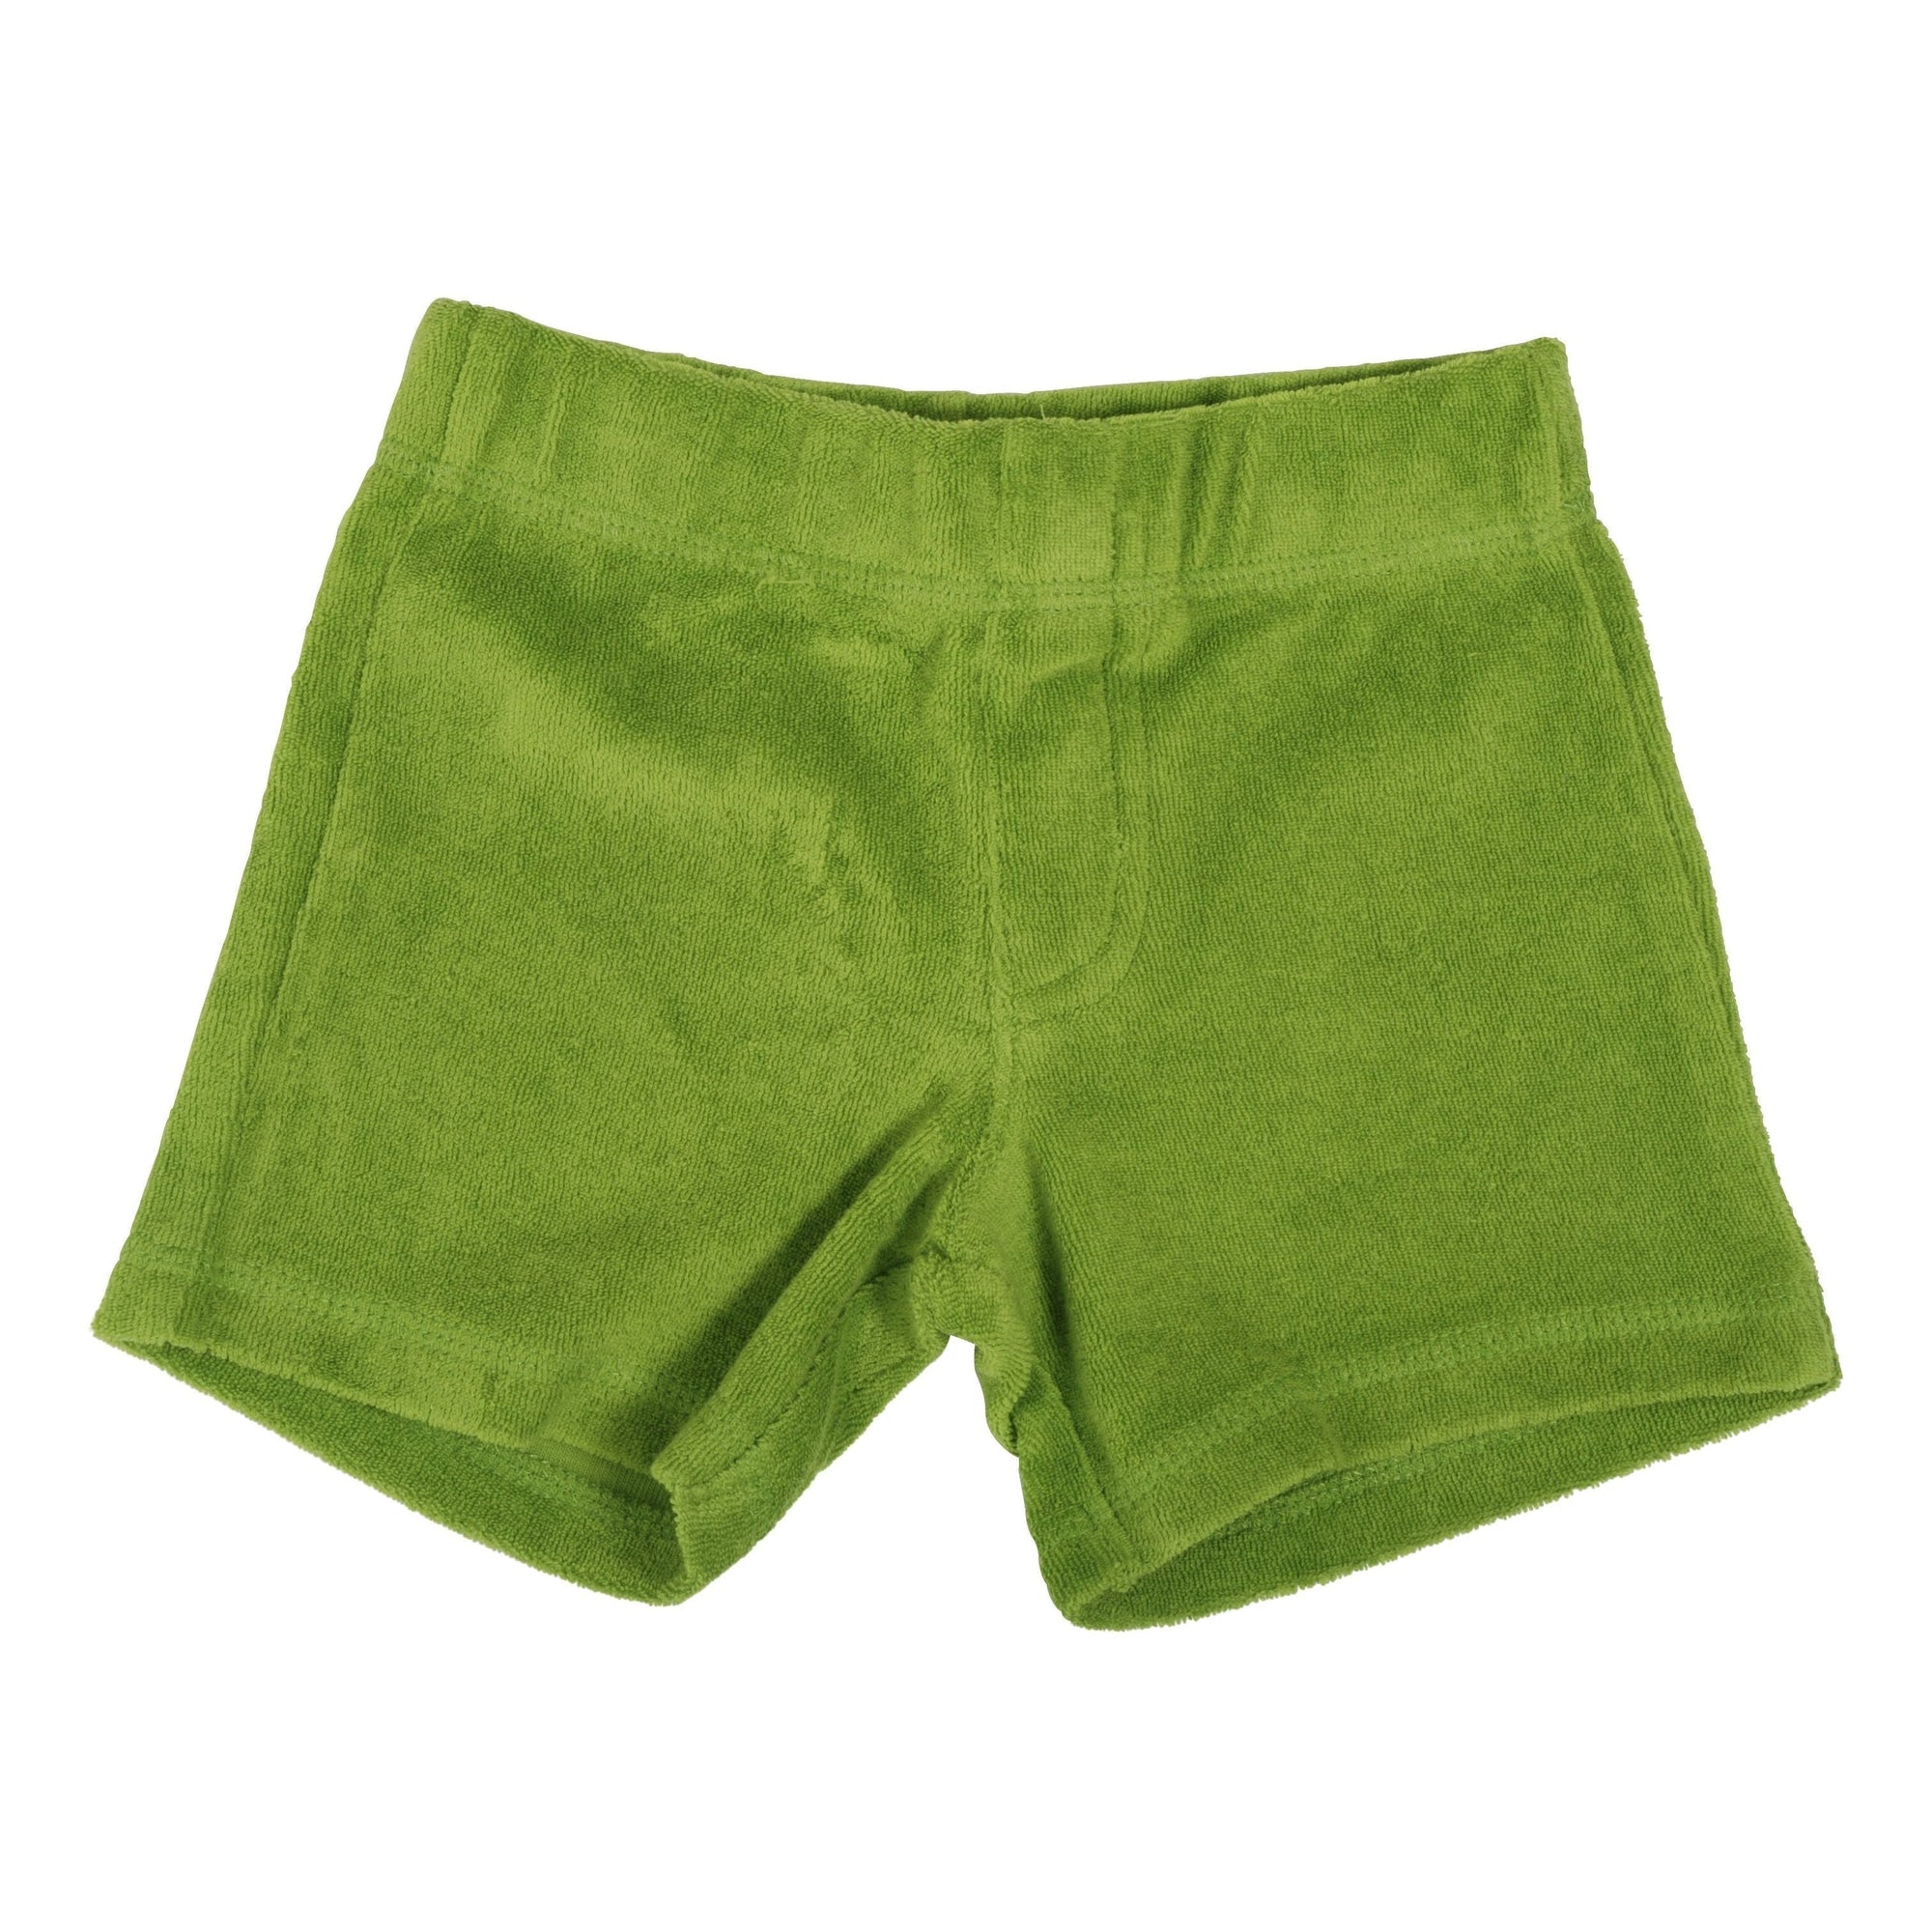 Greenery Terry Shorts - 1 Left Size 6-12 months-Duns Sweden-Modern Rascals